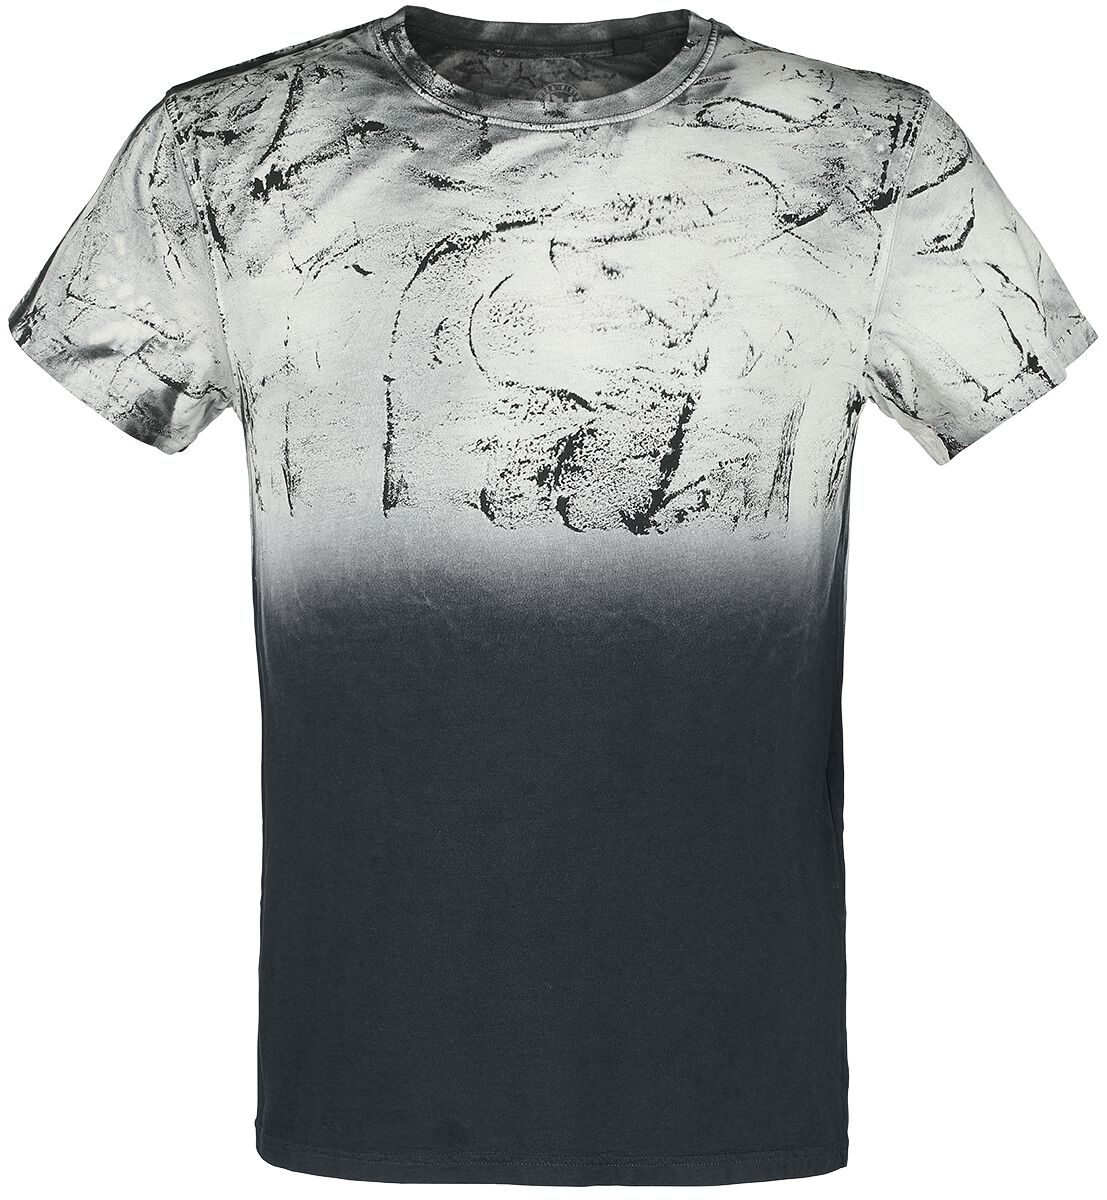 Outer Vision Man`s T-Shirt Spatolato T-Shirt schwarz grau in S